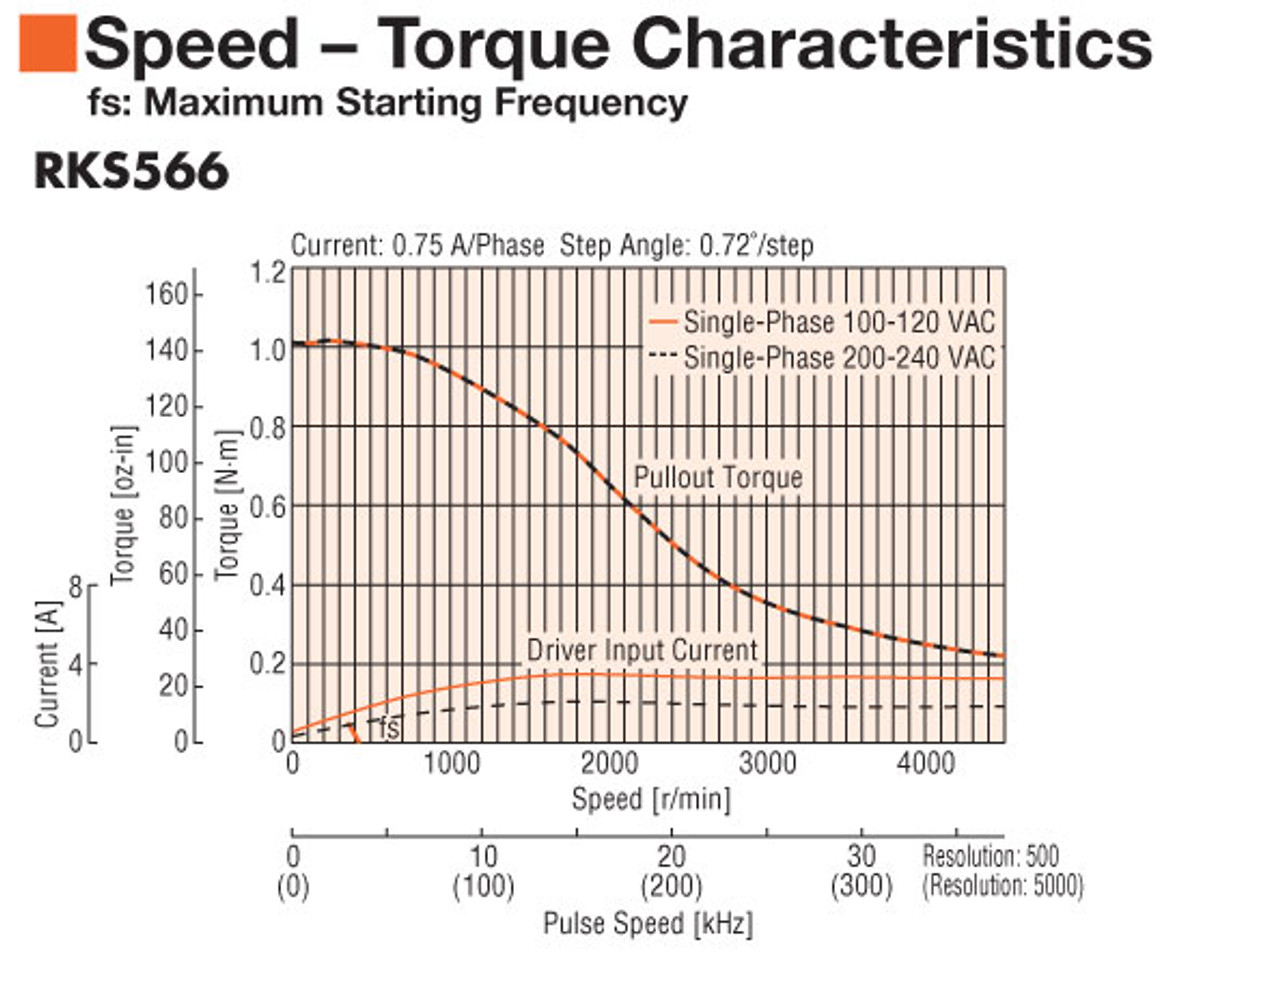 PKE566AC - Speed-Torque